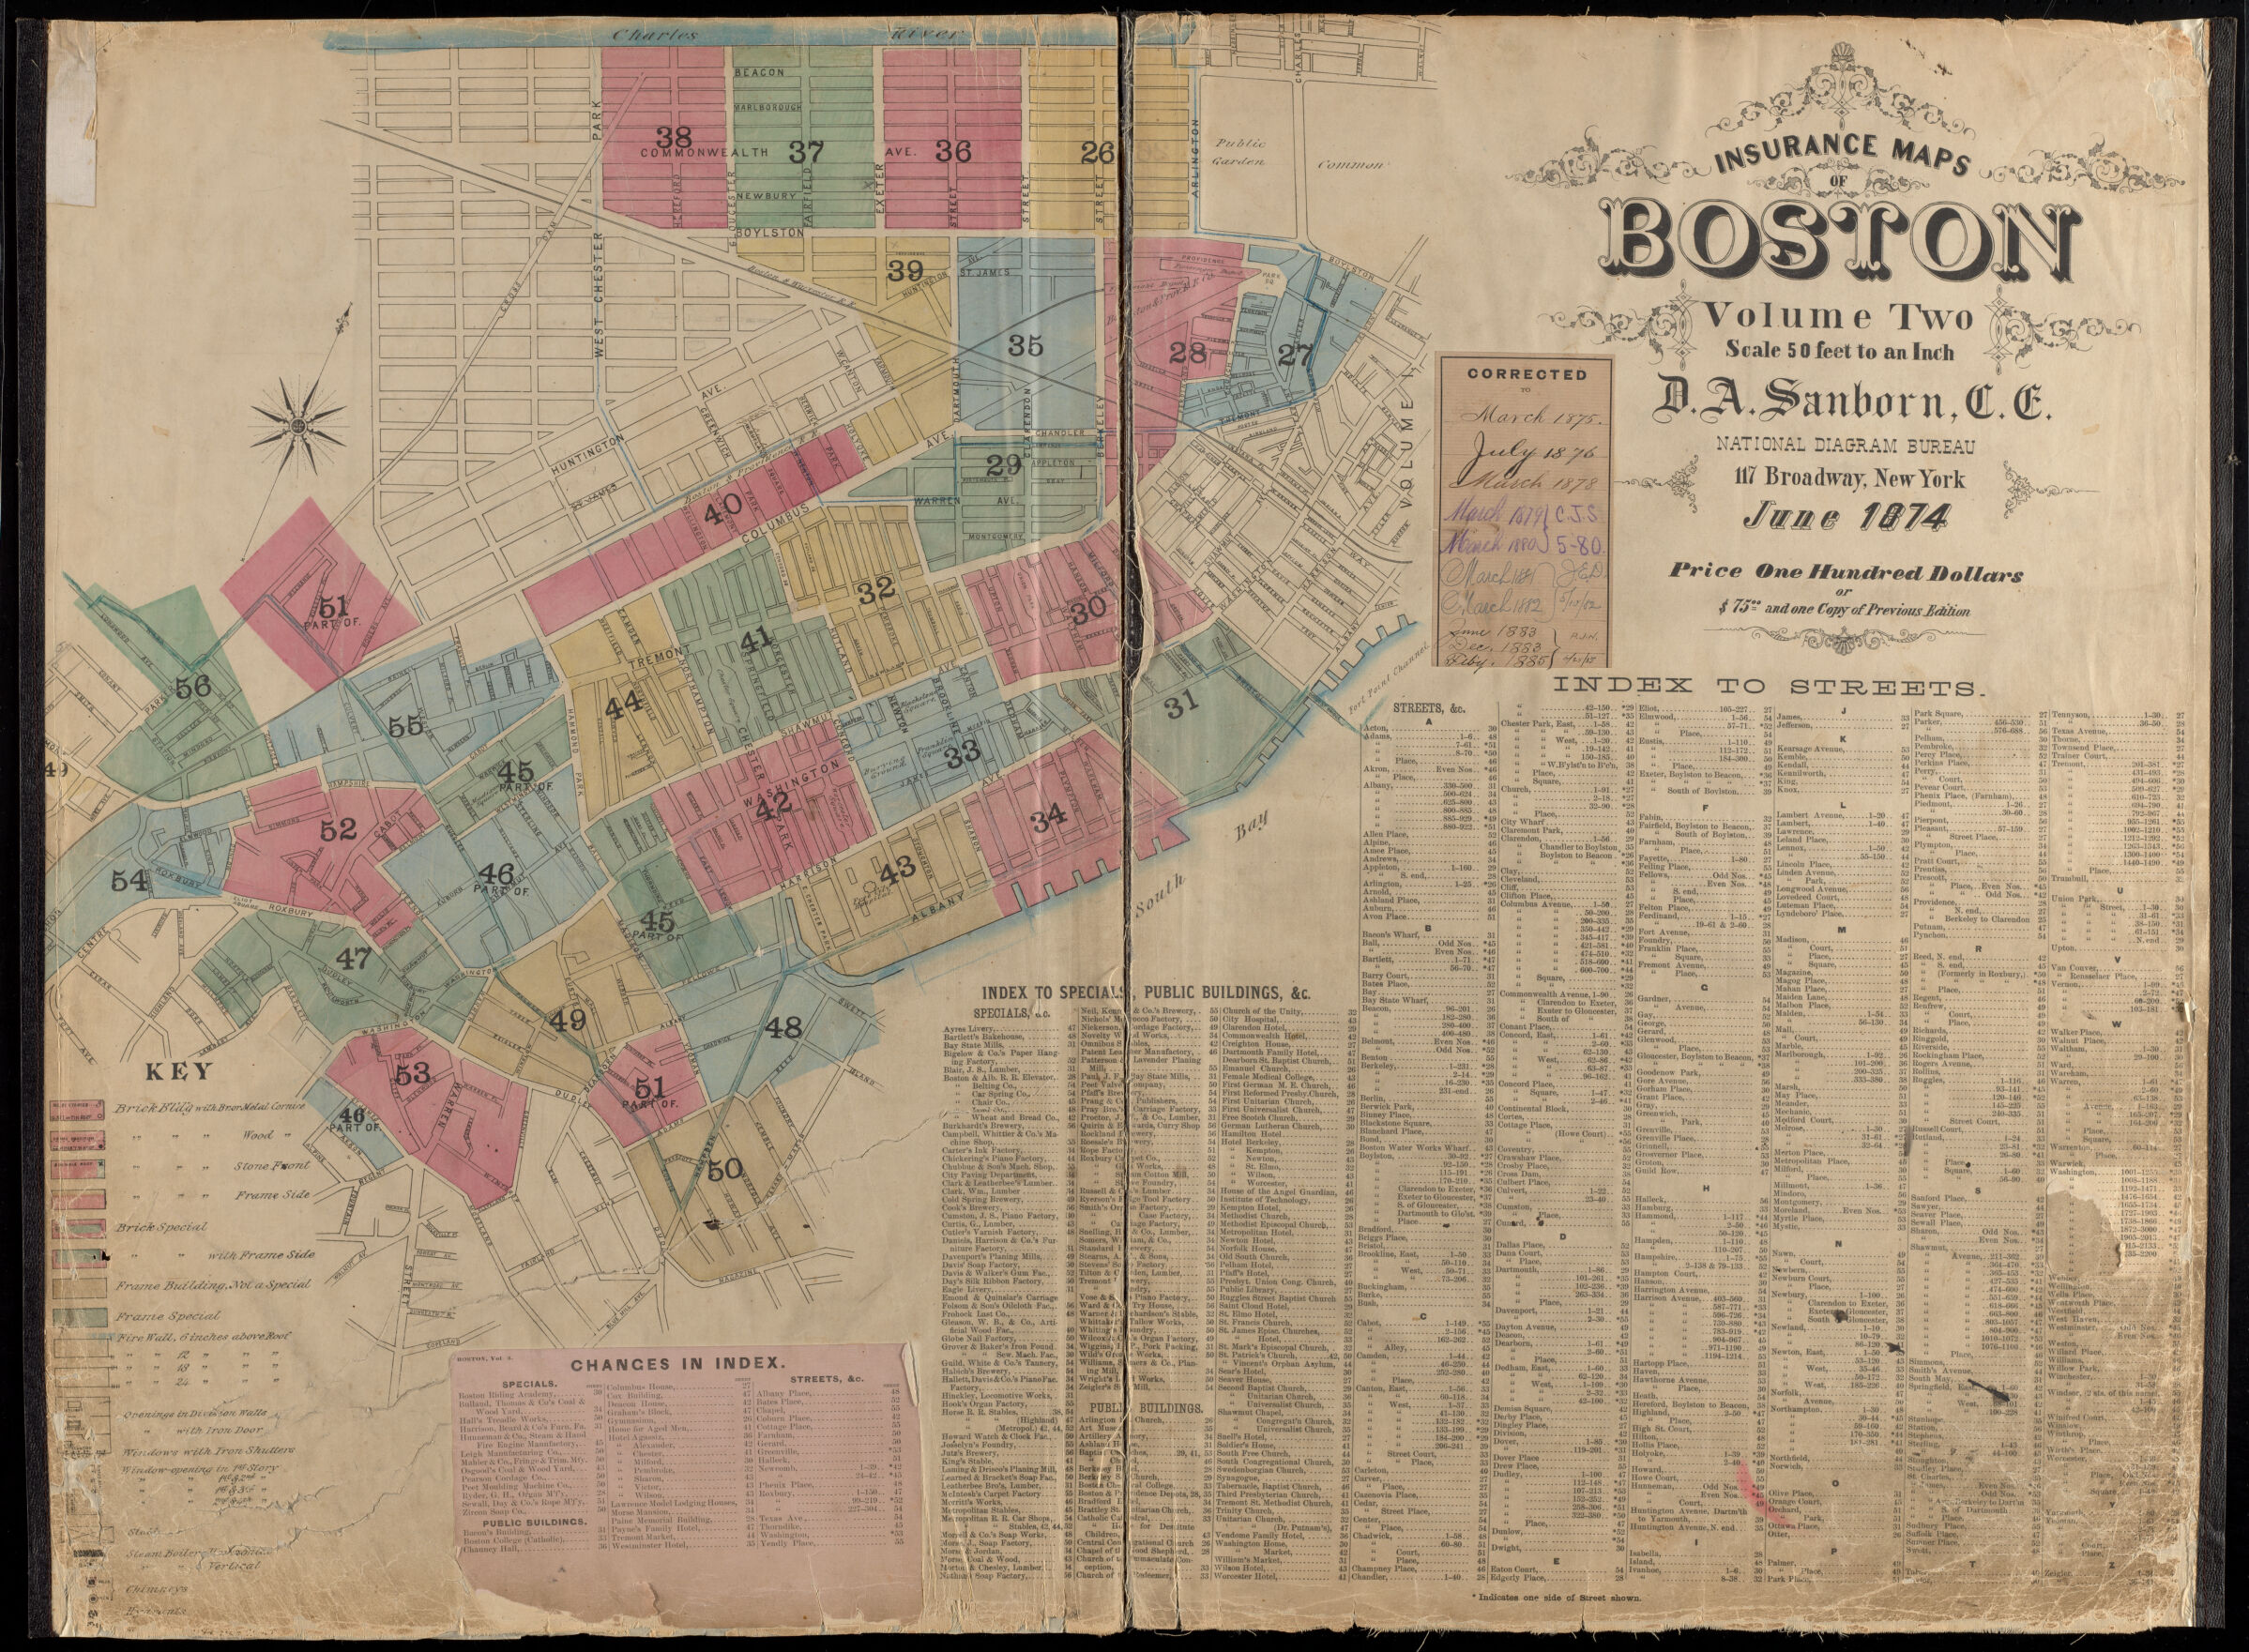 Insurance maps of Boston volume two